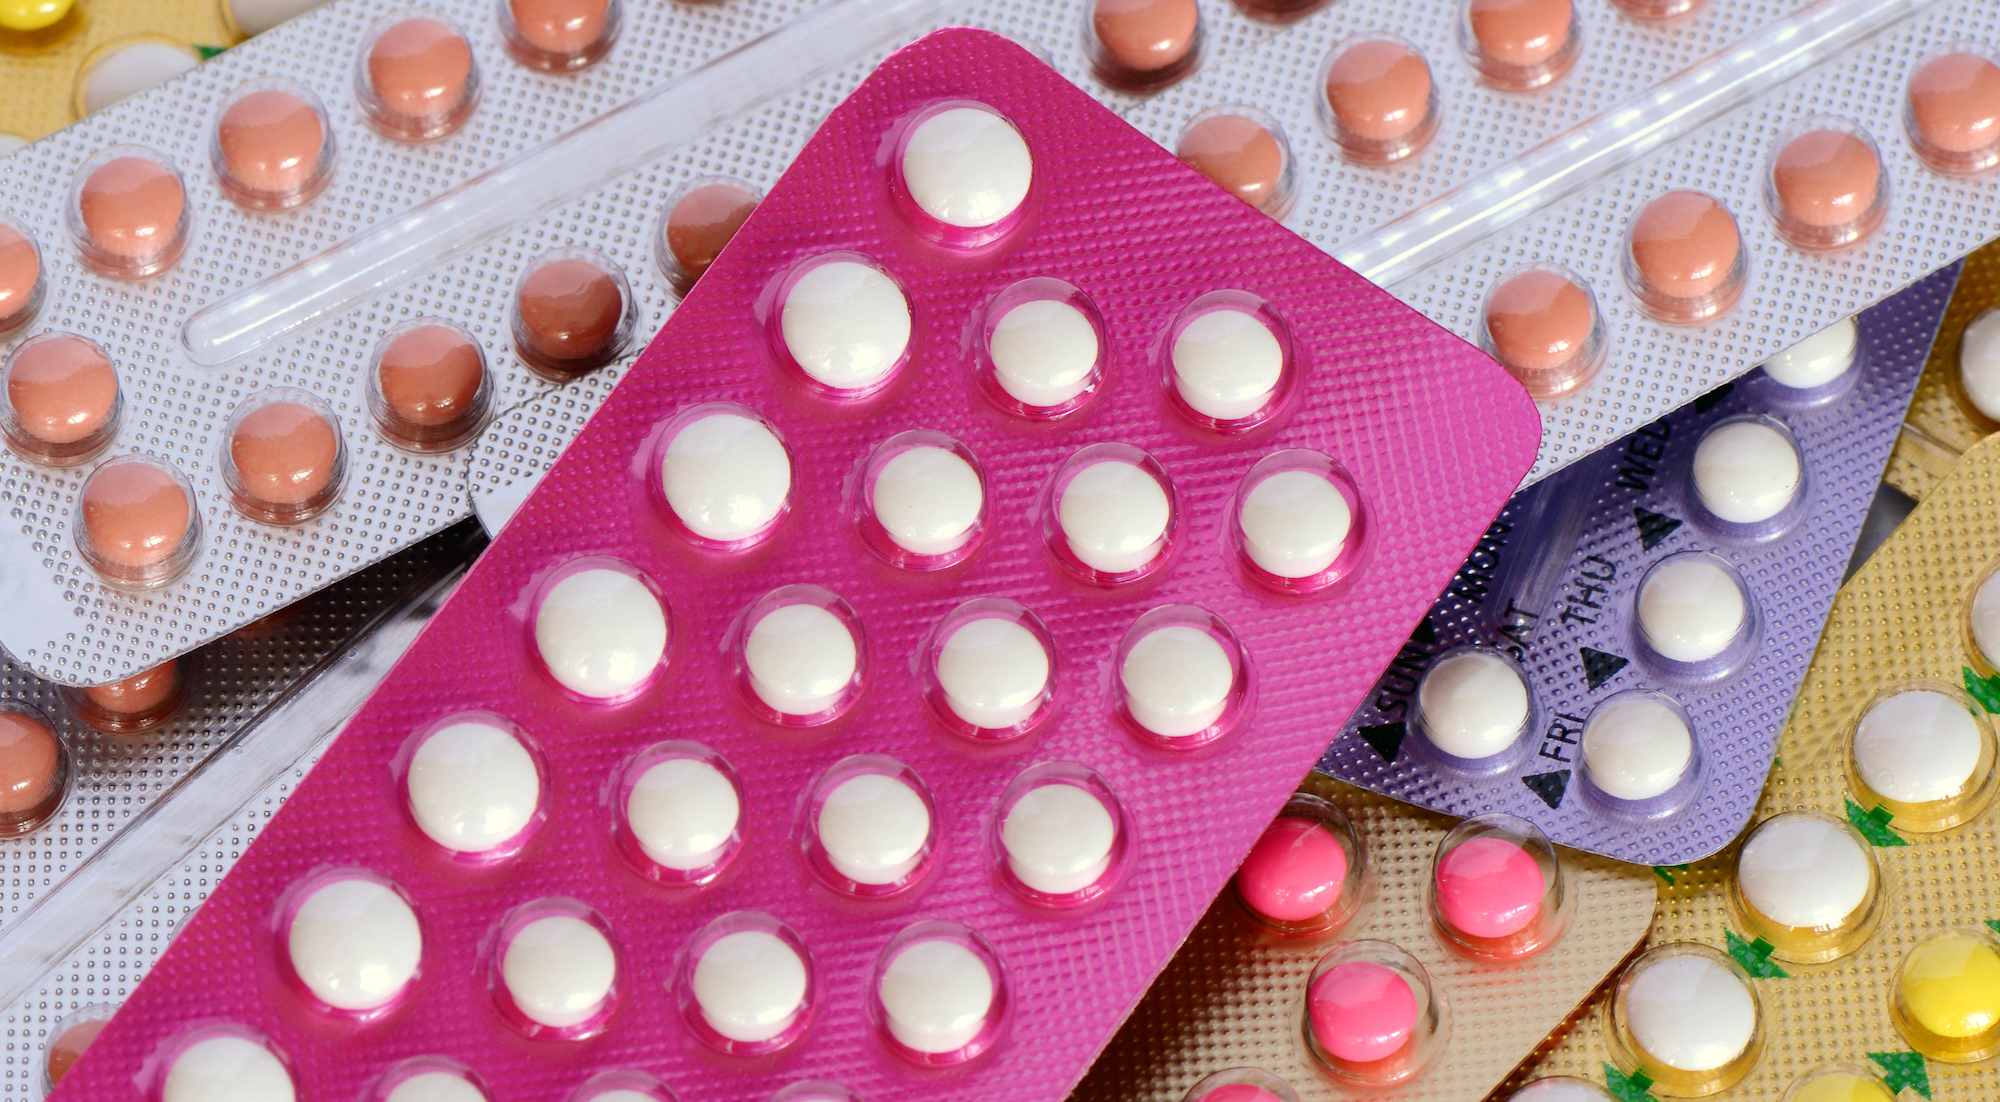 multicolor packs of birth control pills